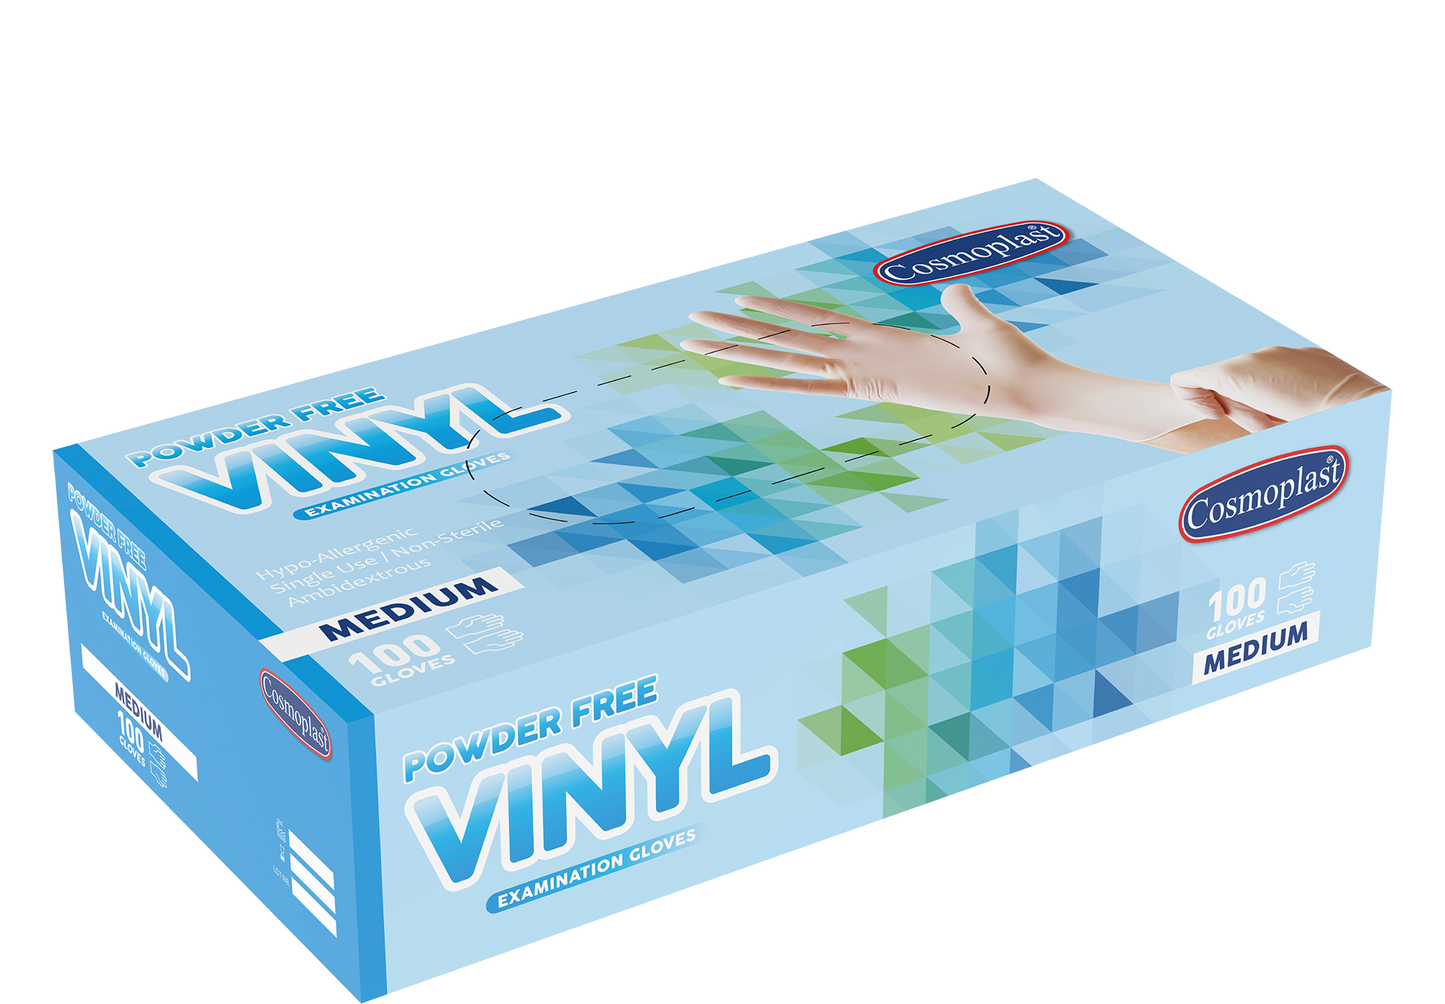 Cosmoplast Hygiene Clear Powder-free Vinyl Gloves Medium 100 Pcs